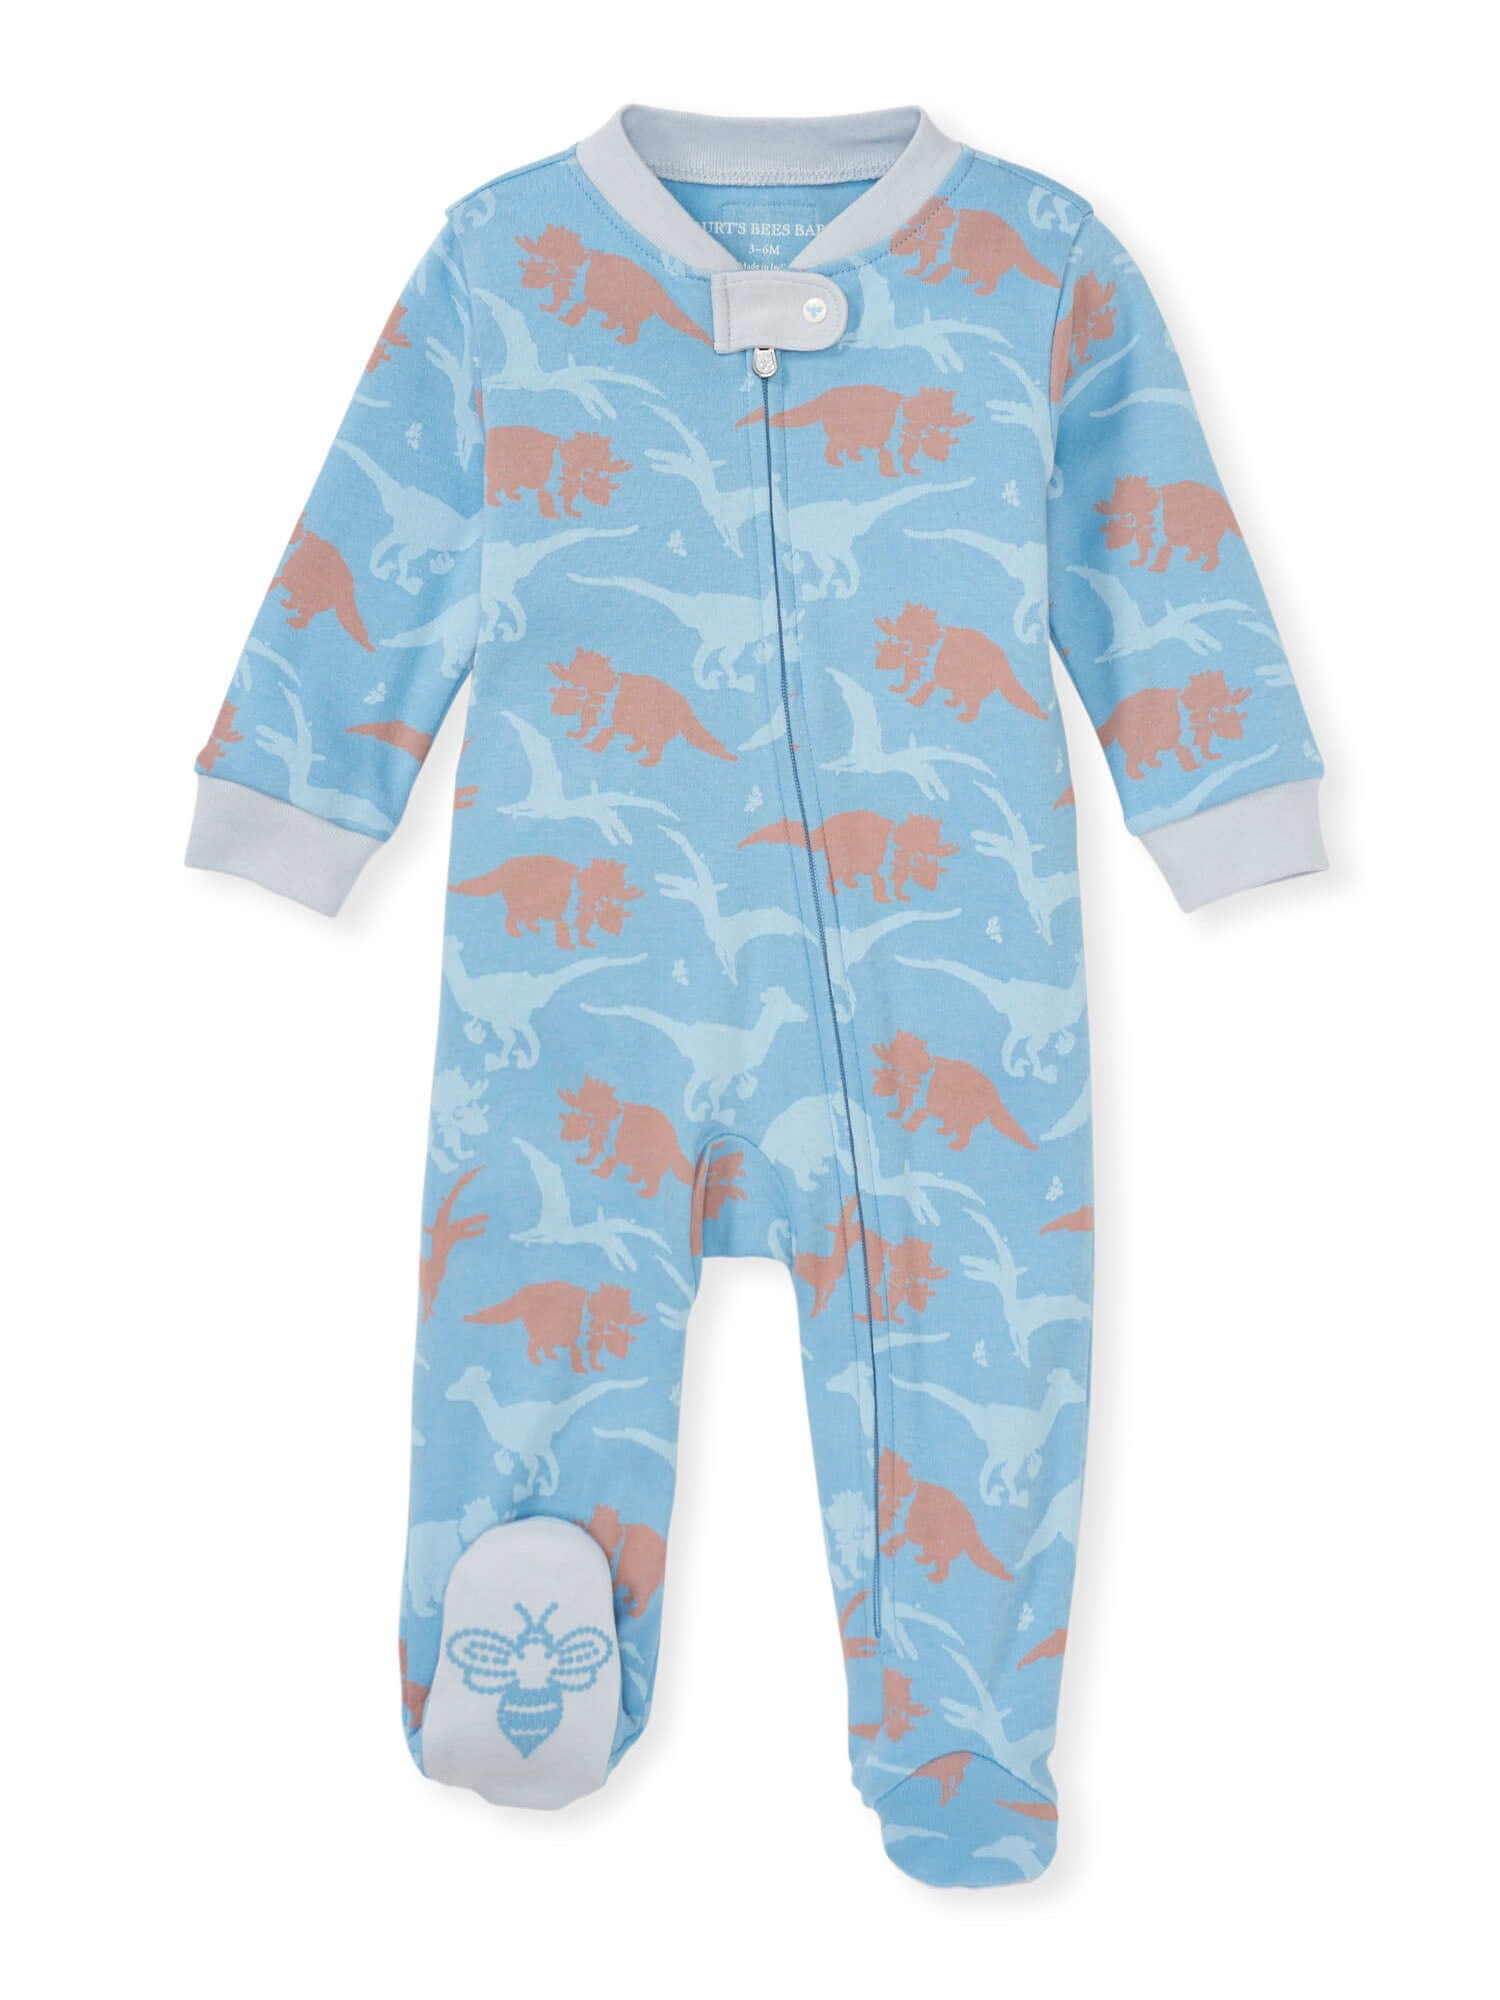 100% Organic Cotton One-Piece Romper Jumpsuit Zip Front Pajamas Burt's Bees Baby Baby Boys' Sleep and Play Pjs 